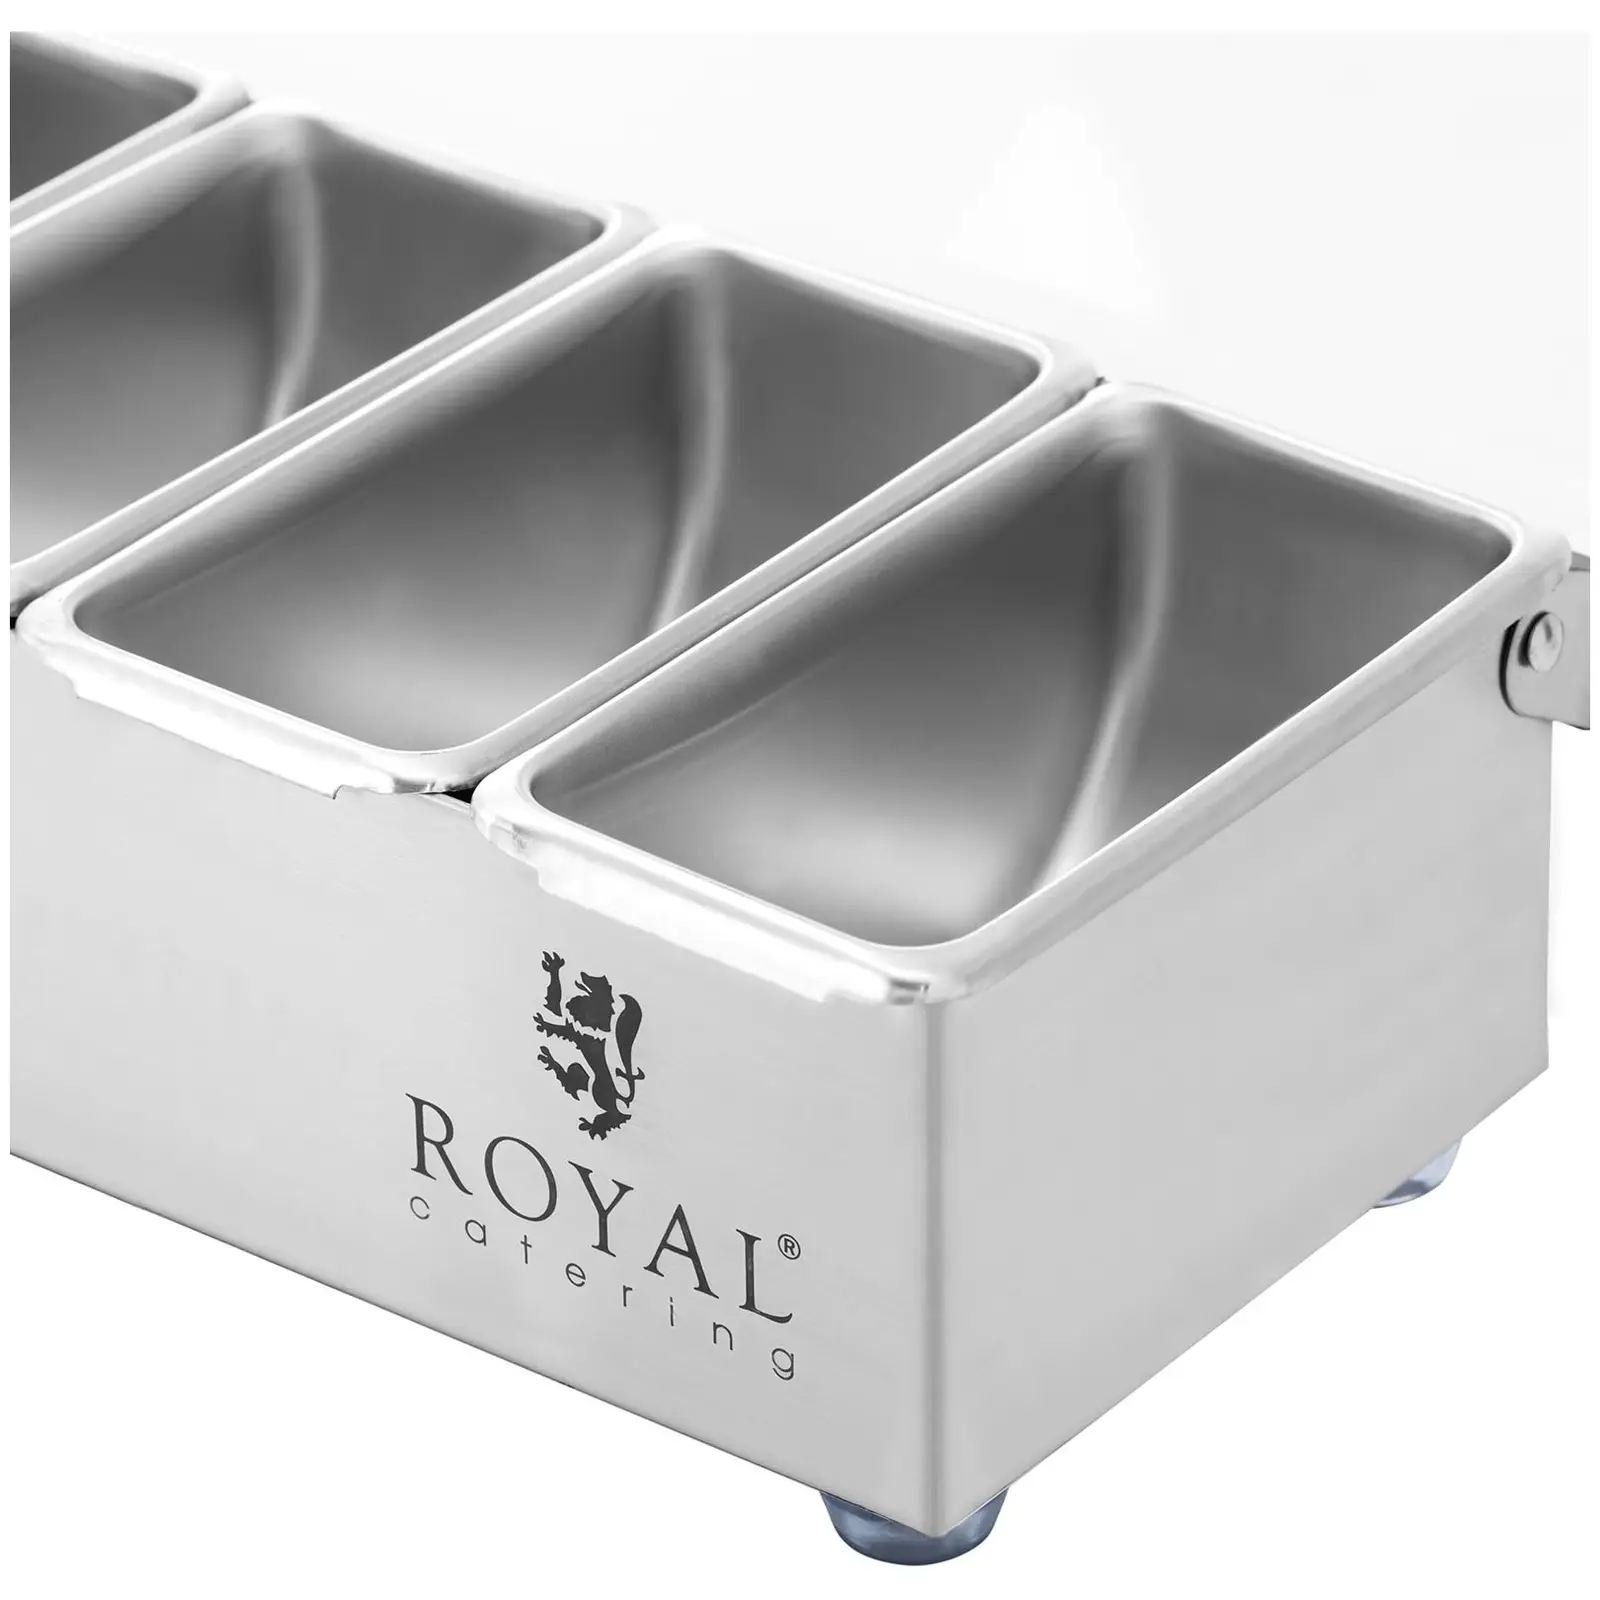 Zutatenbehälter - Edelstahl - 5 x 0,4 L - Royal Catering